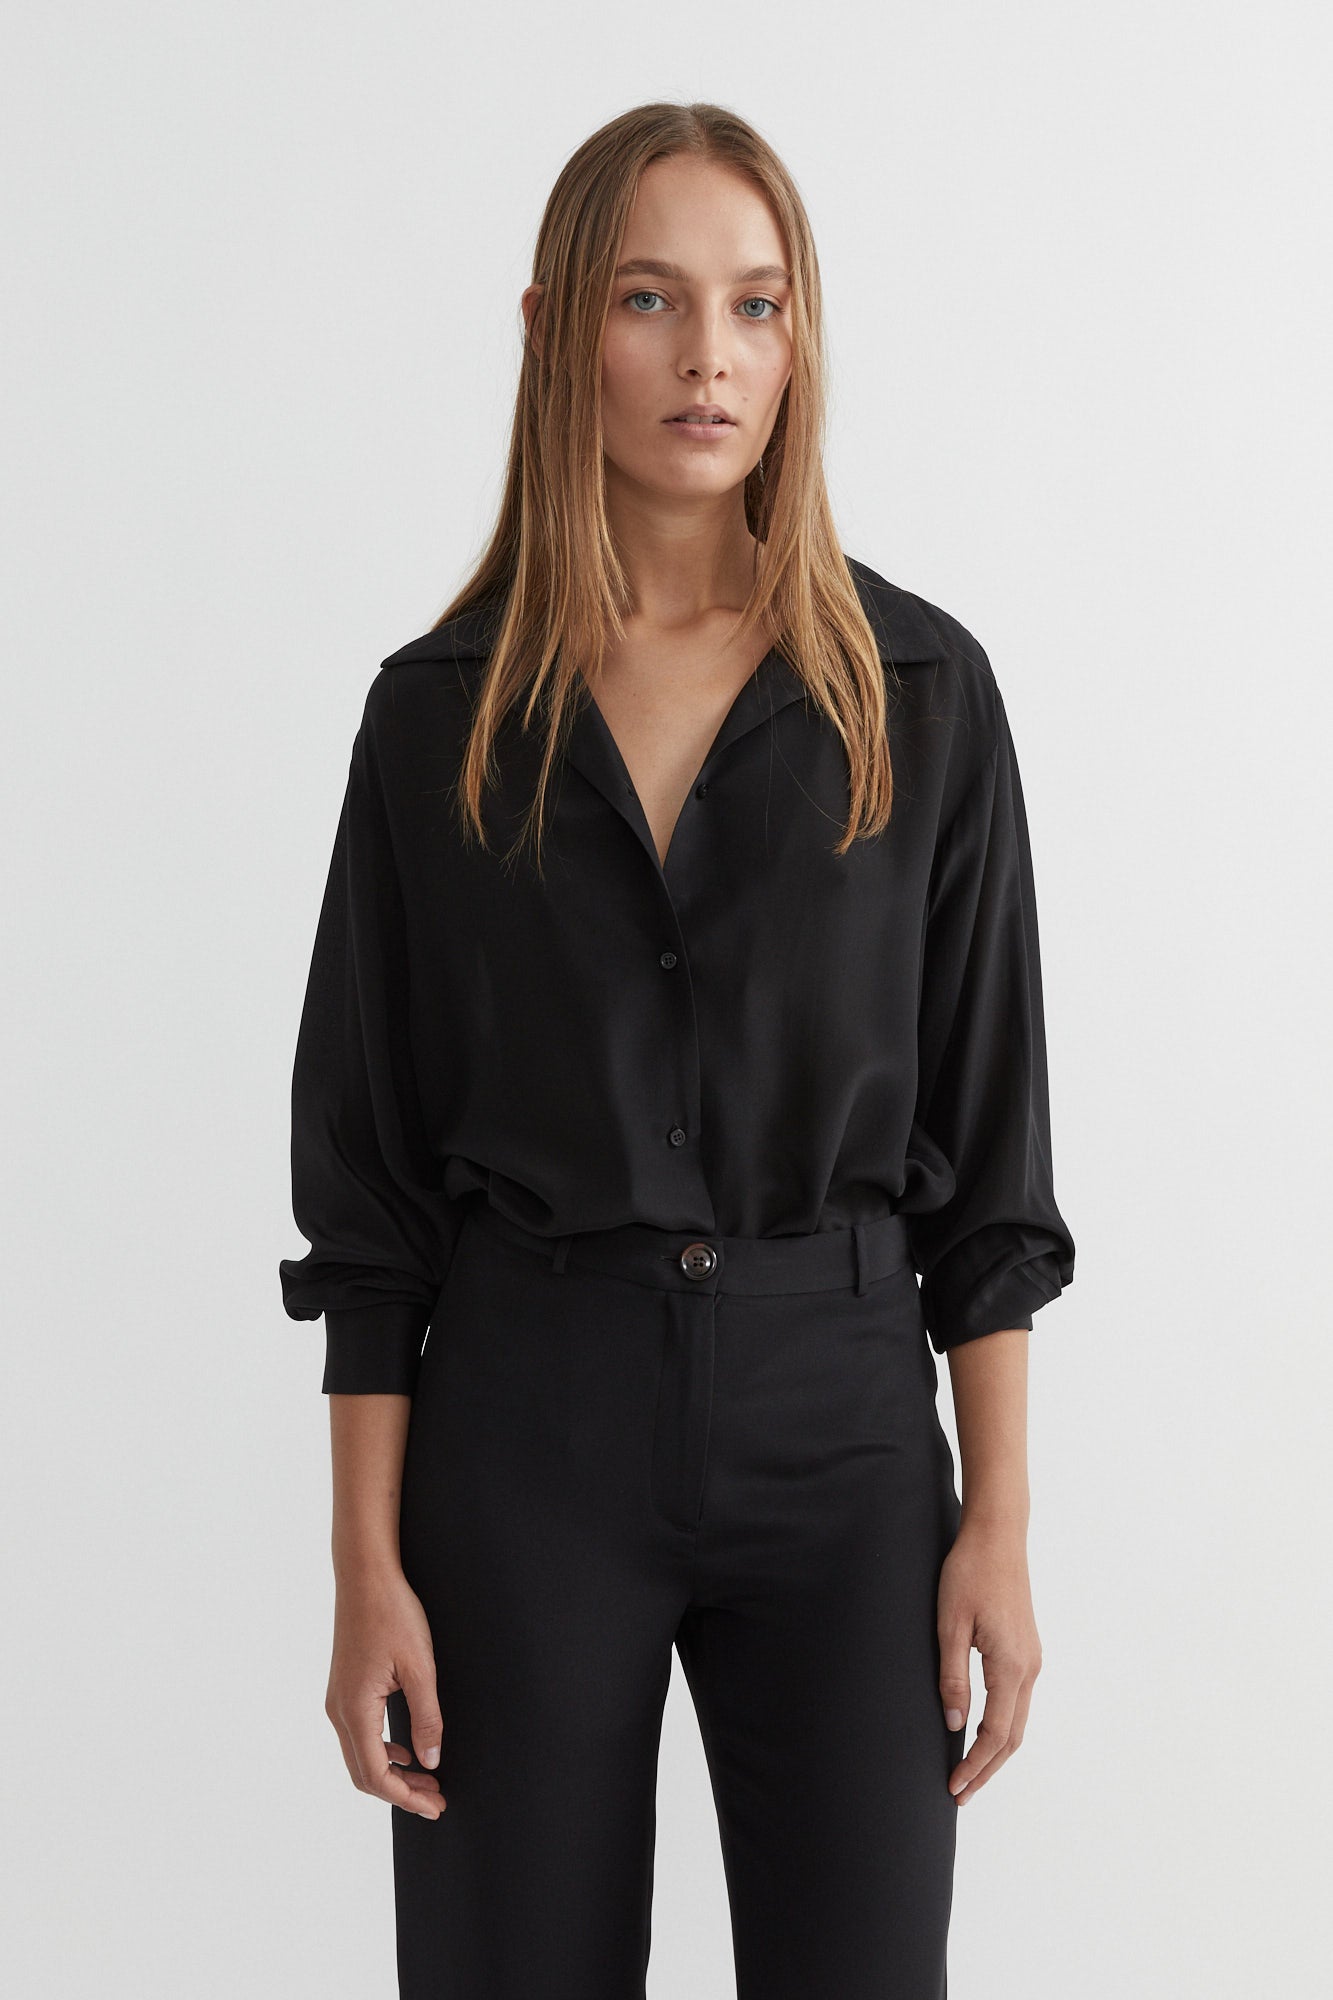 SAINT Lookbook Classic Silk Shirt in black silk crepe, long sleeve button up. Made in Australia